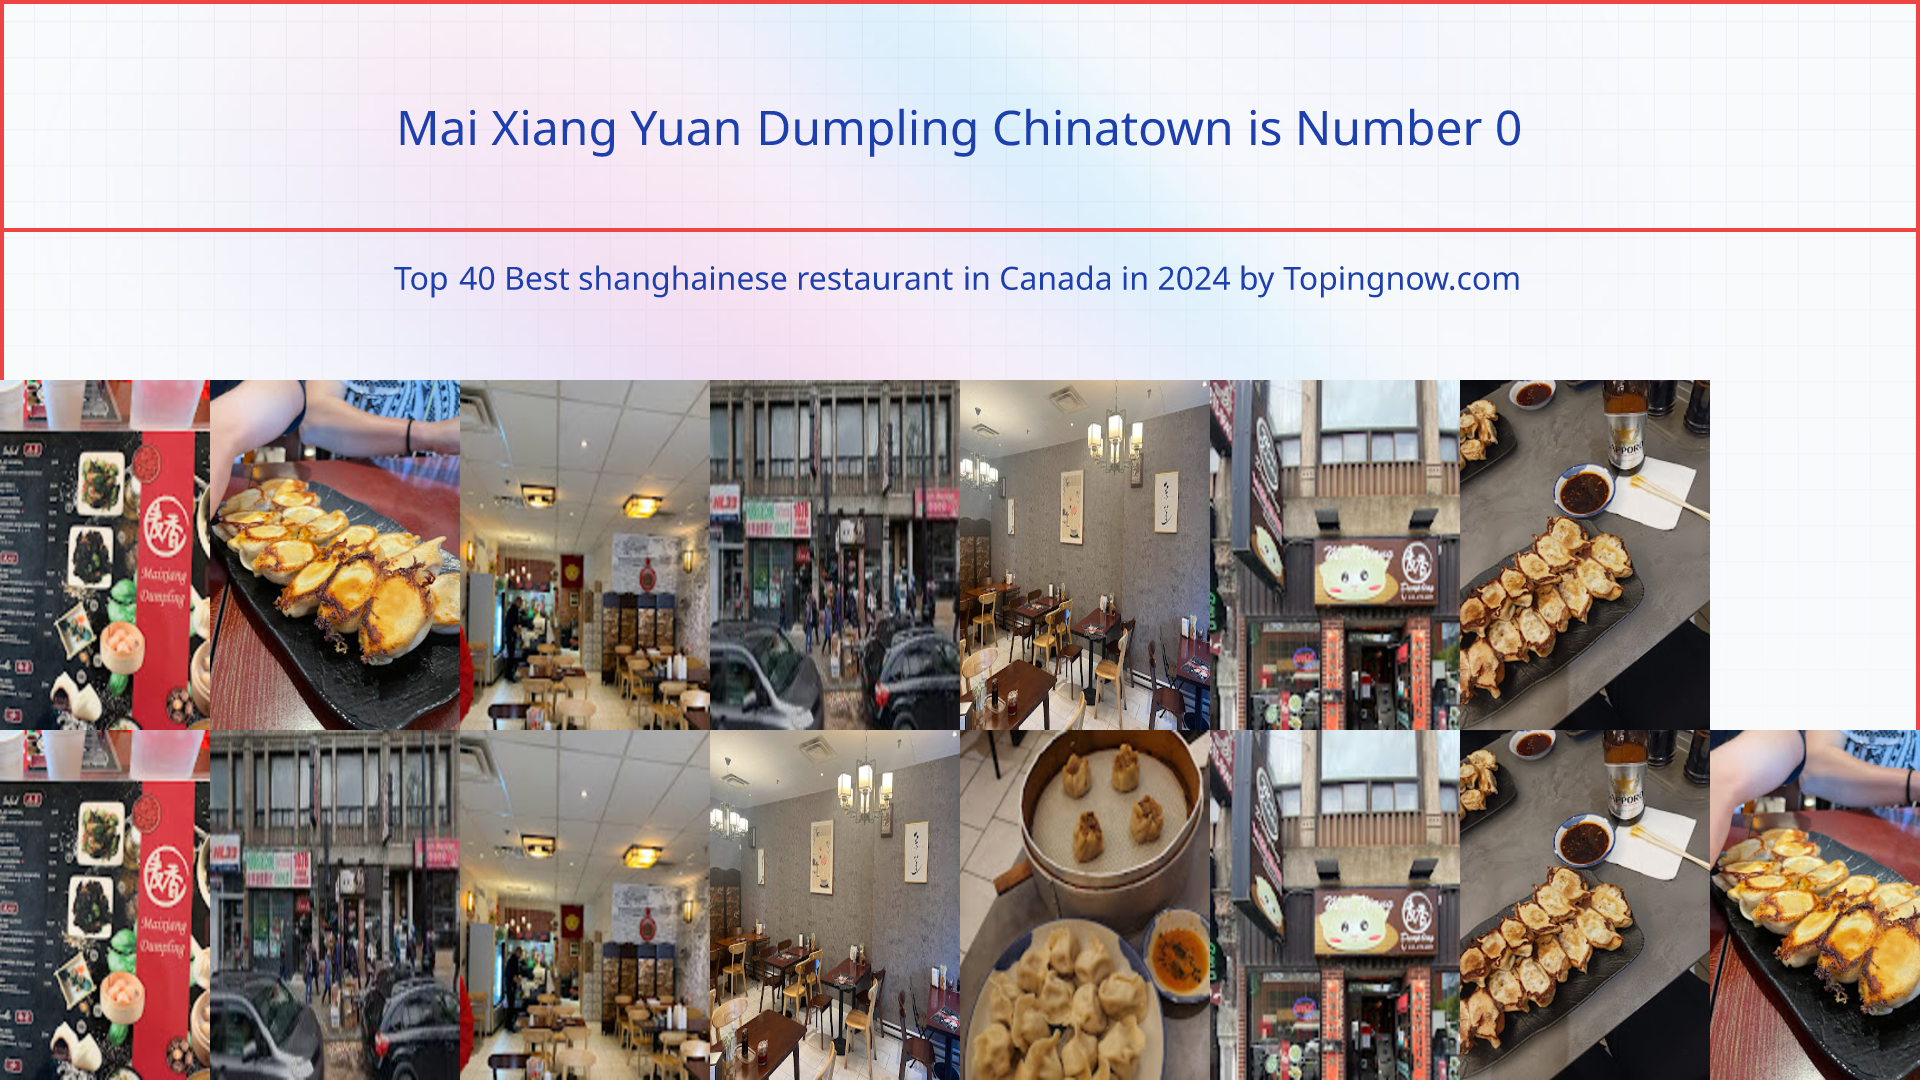 Mai Xiang Yuan Dumpling Chinatown: Top 40 Best shanghainese restaurant in Canada in 2024